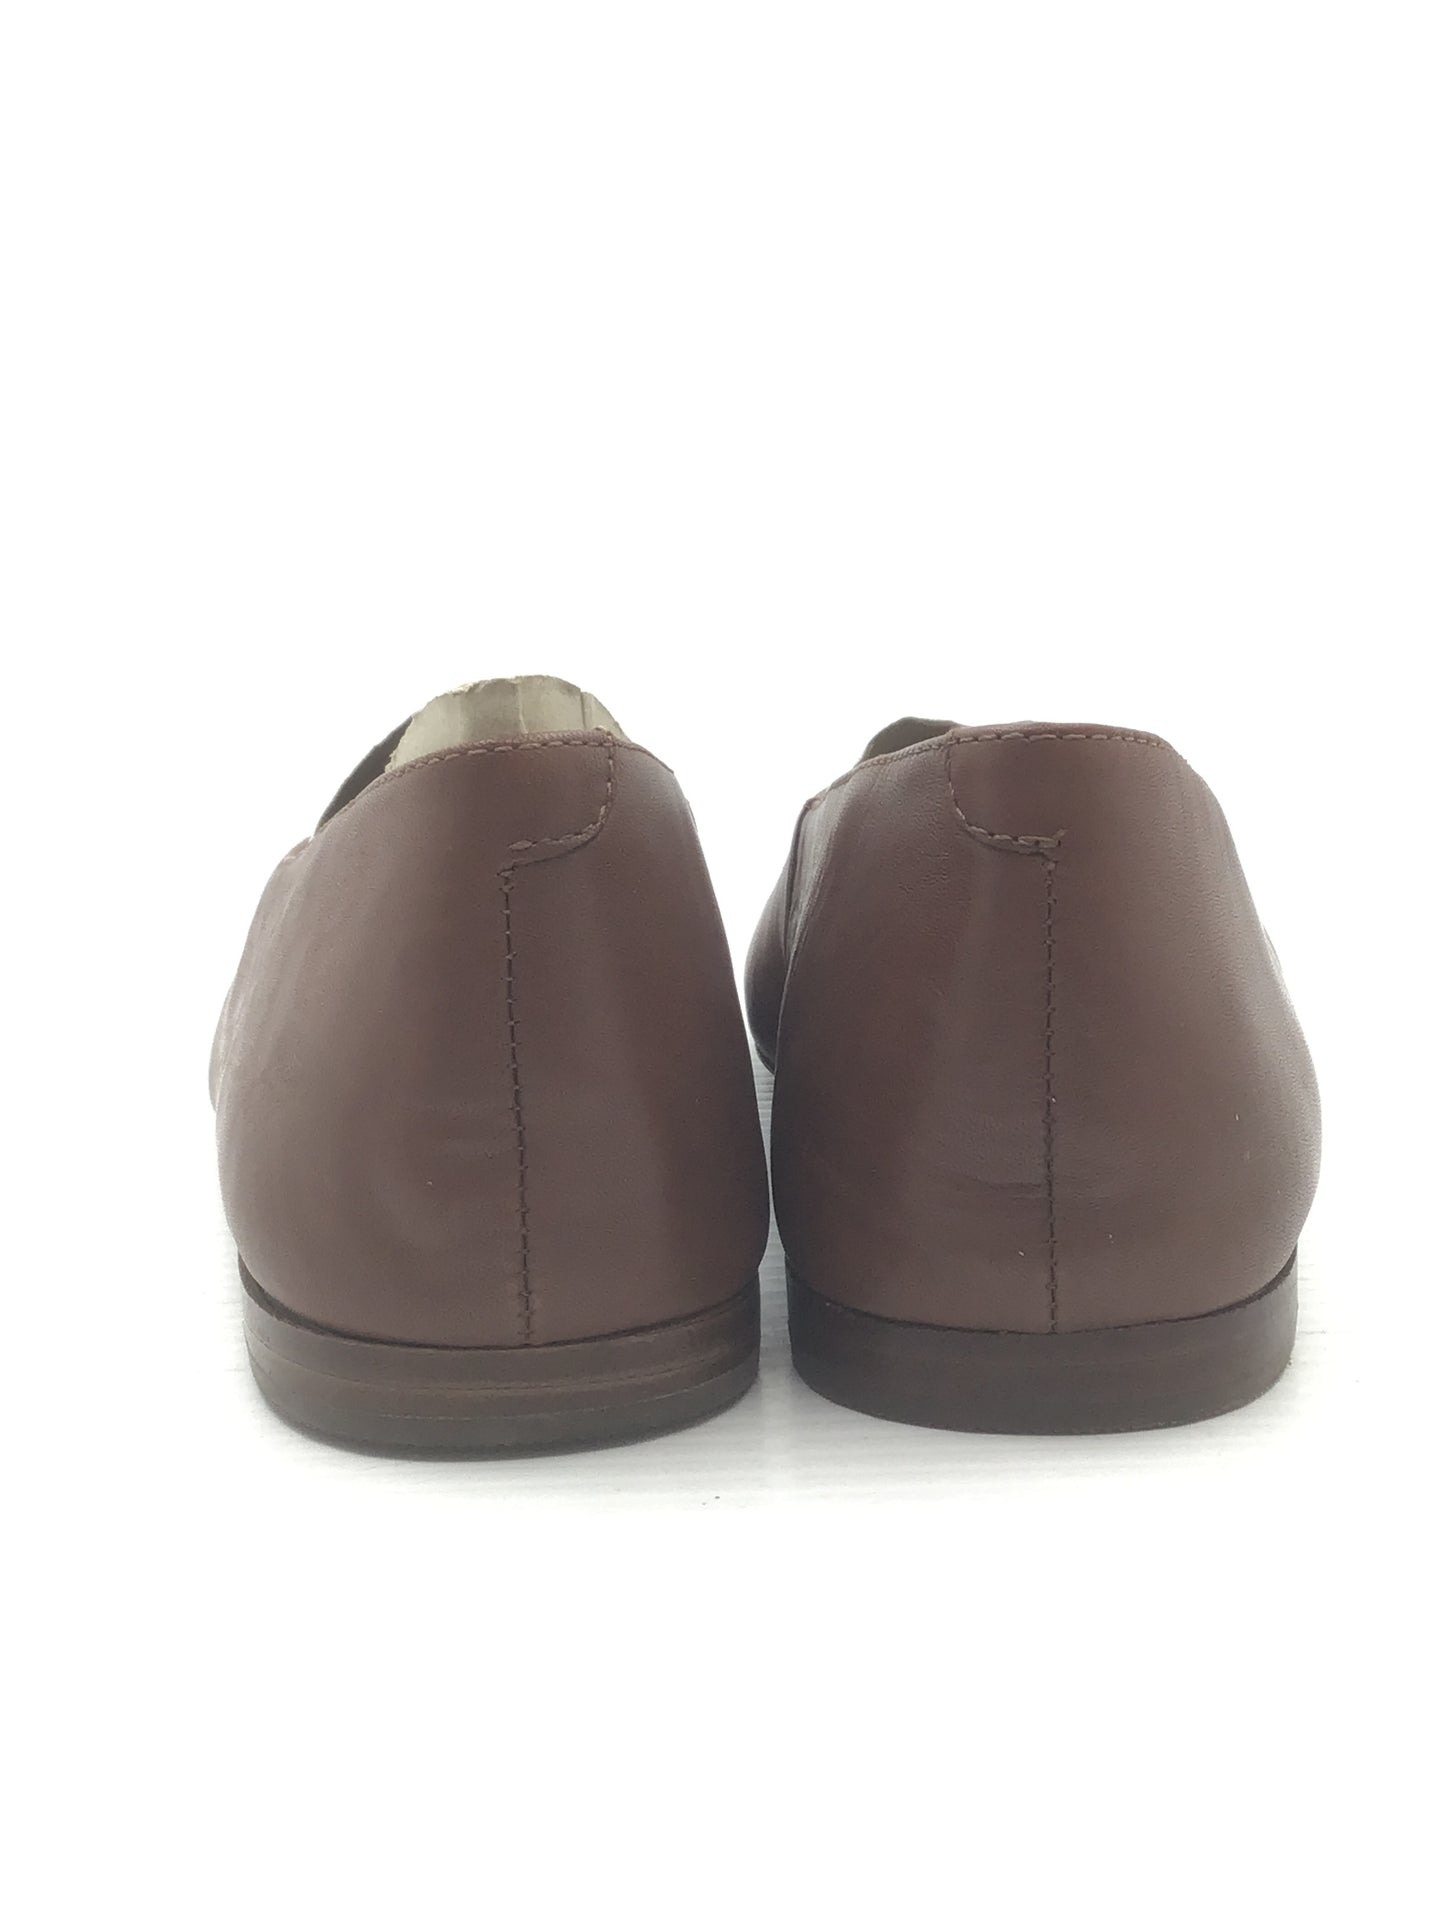 Shoes Flats Ballet By Aerosoles  Size: 7.5